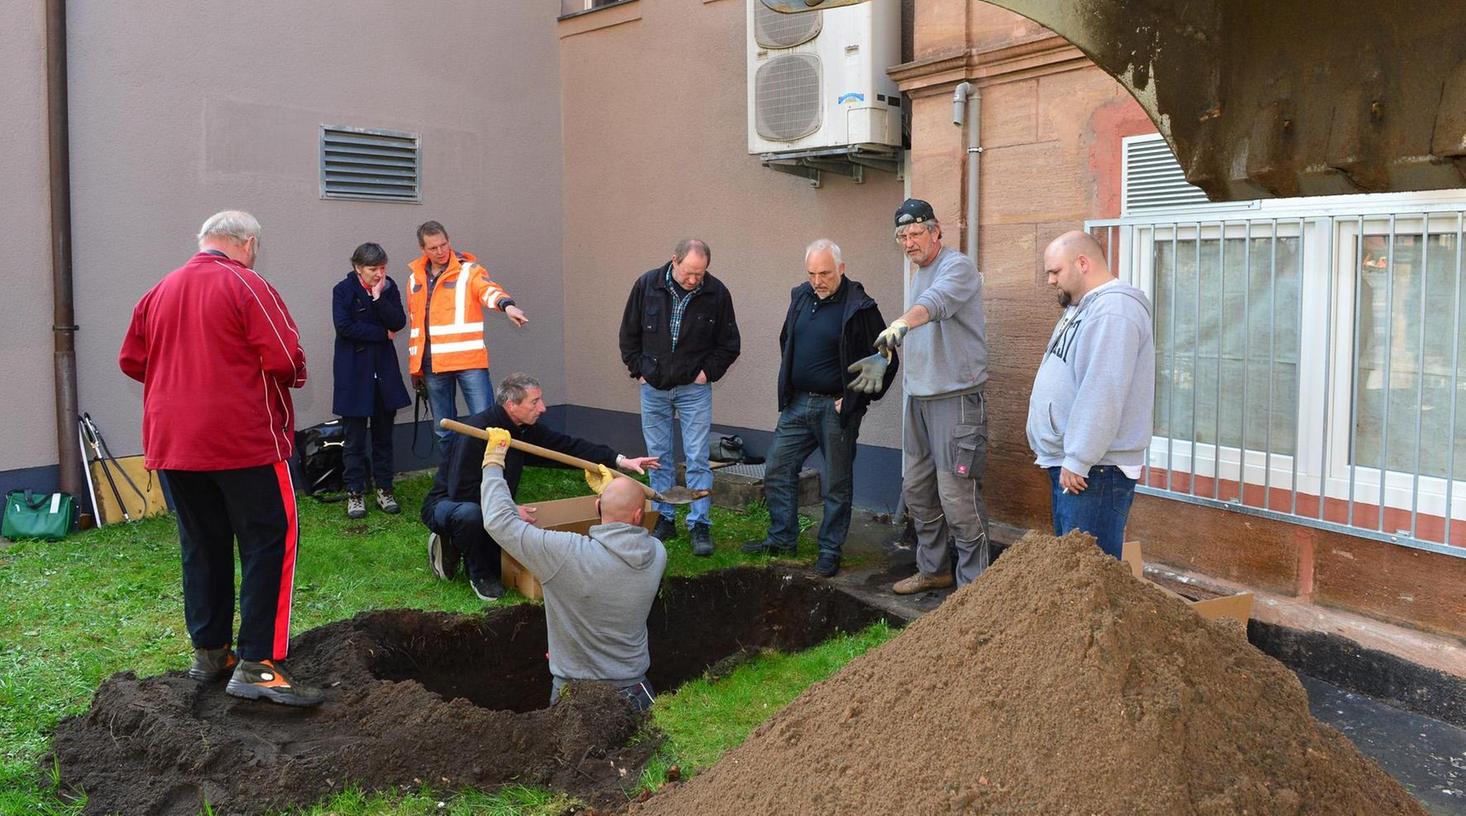 Skelette bei Bauarbeiten in Erlangen ausgegraben